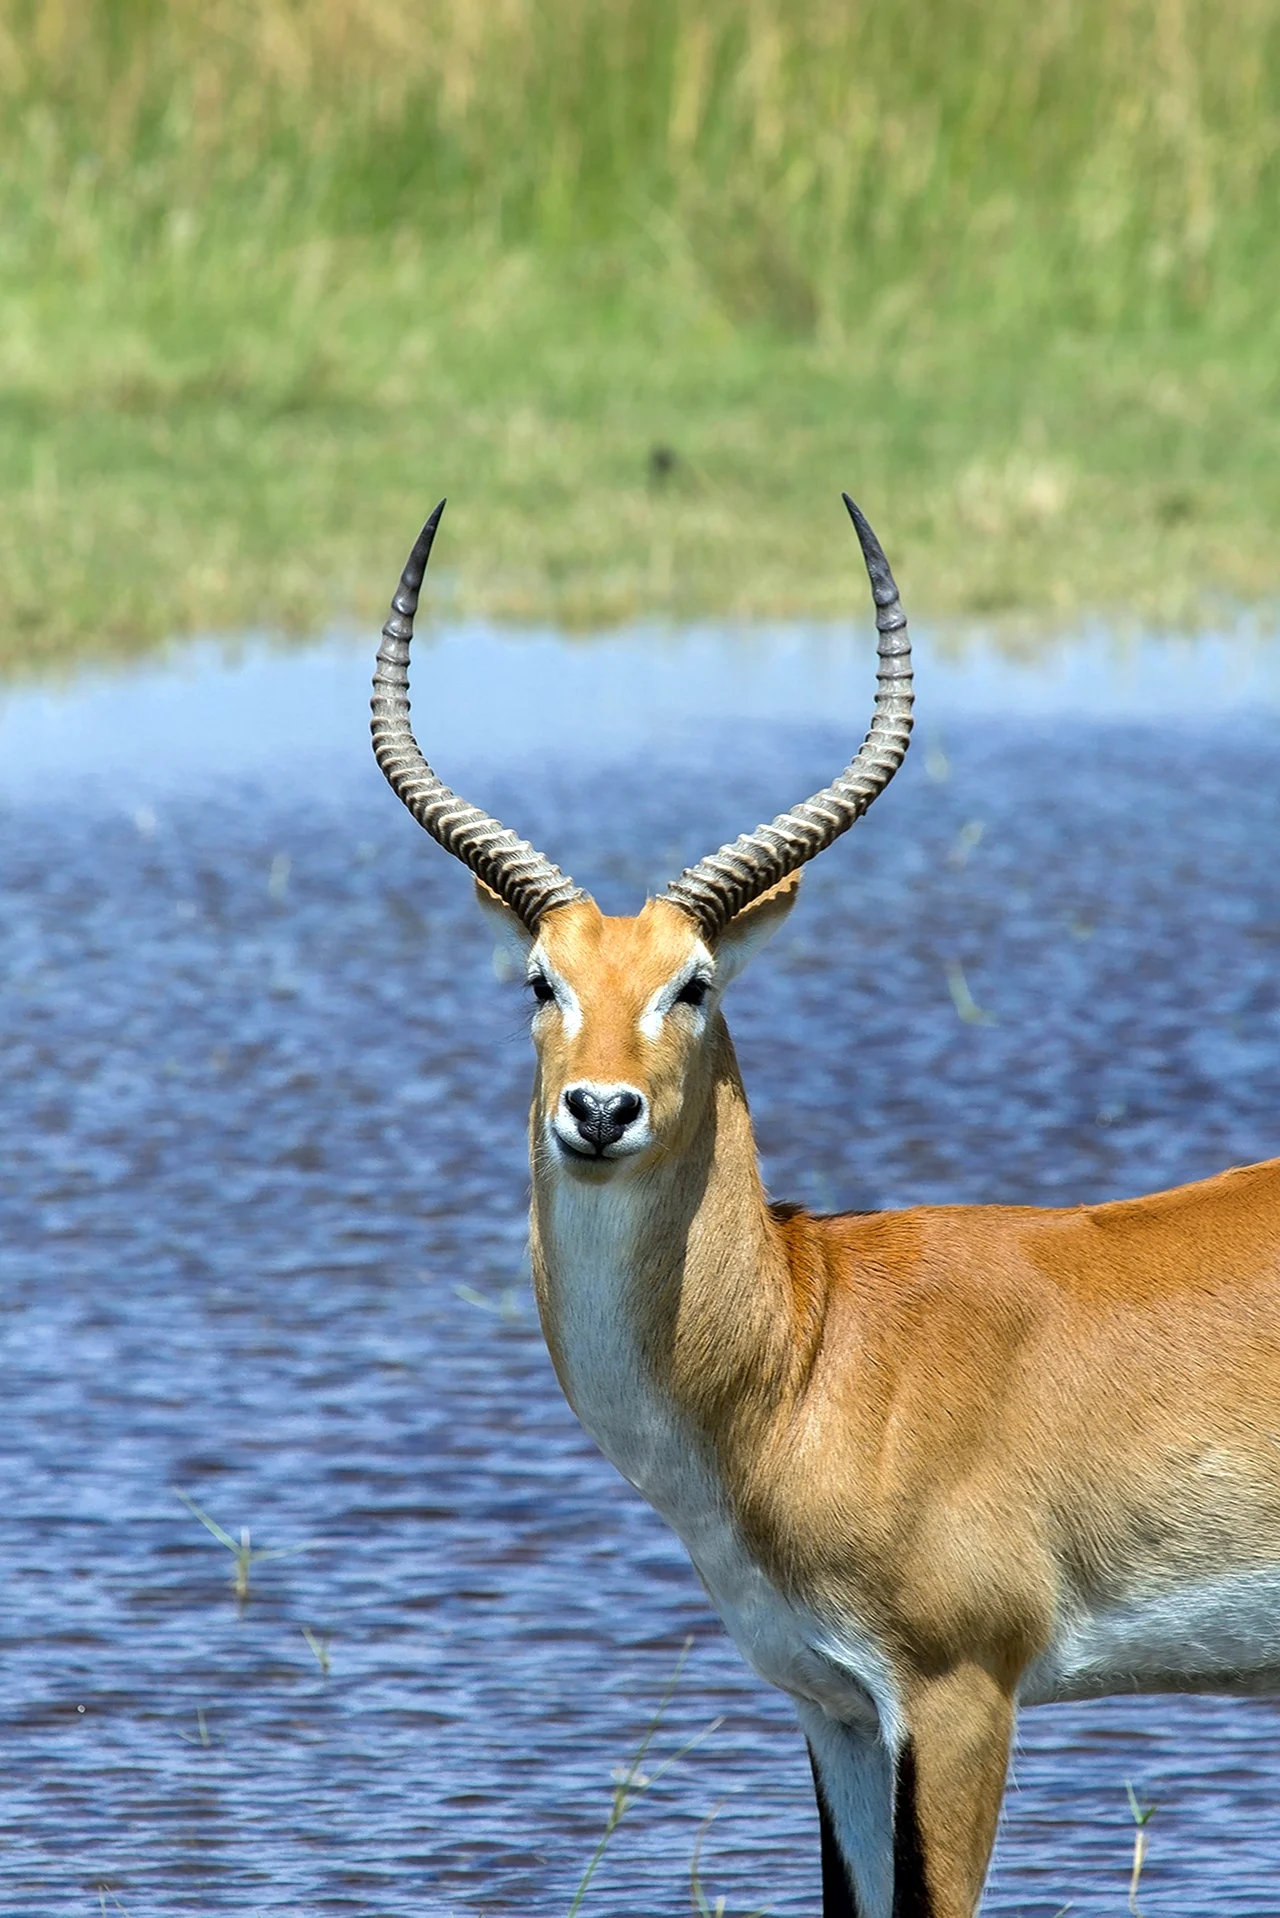 Африканская антилопа Импала. Картинка